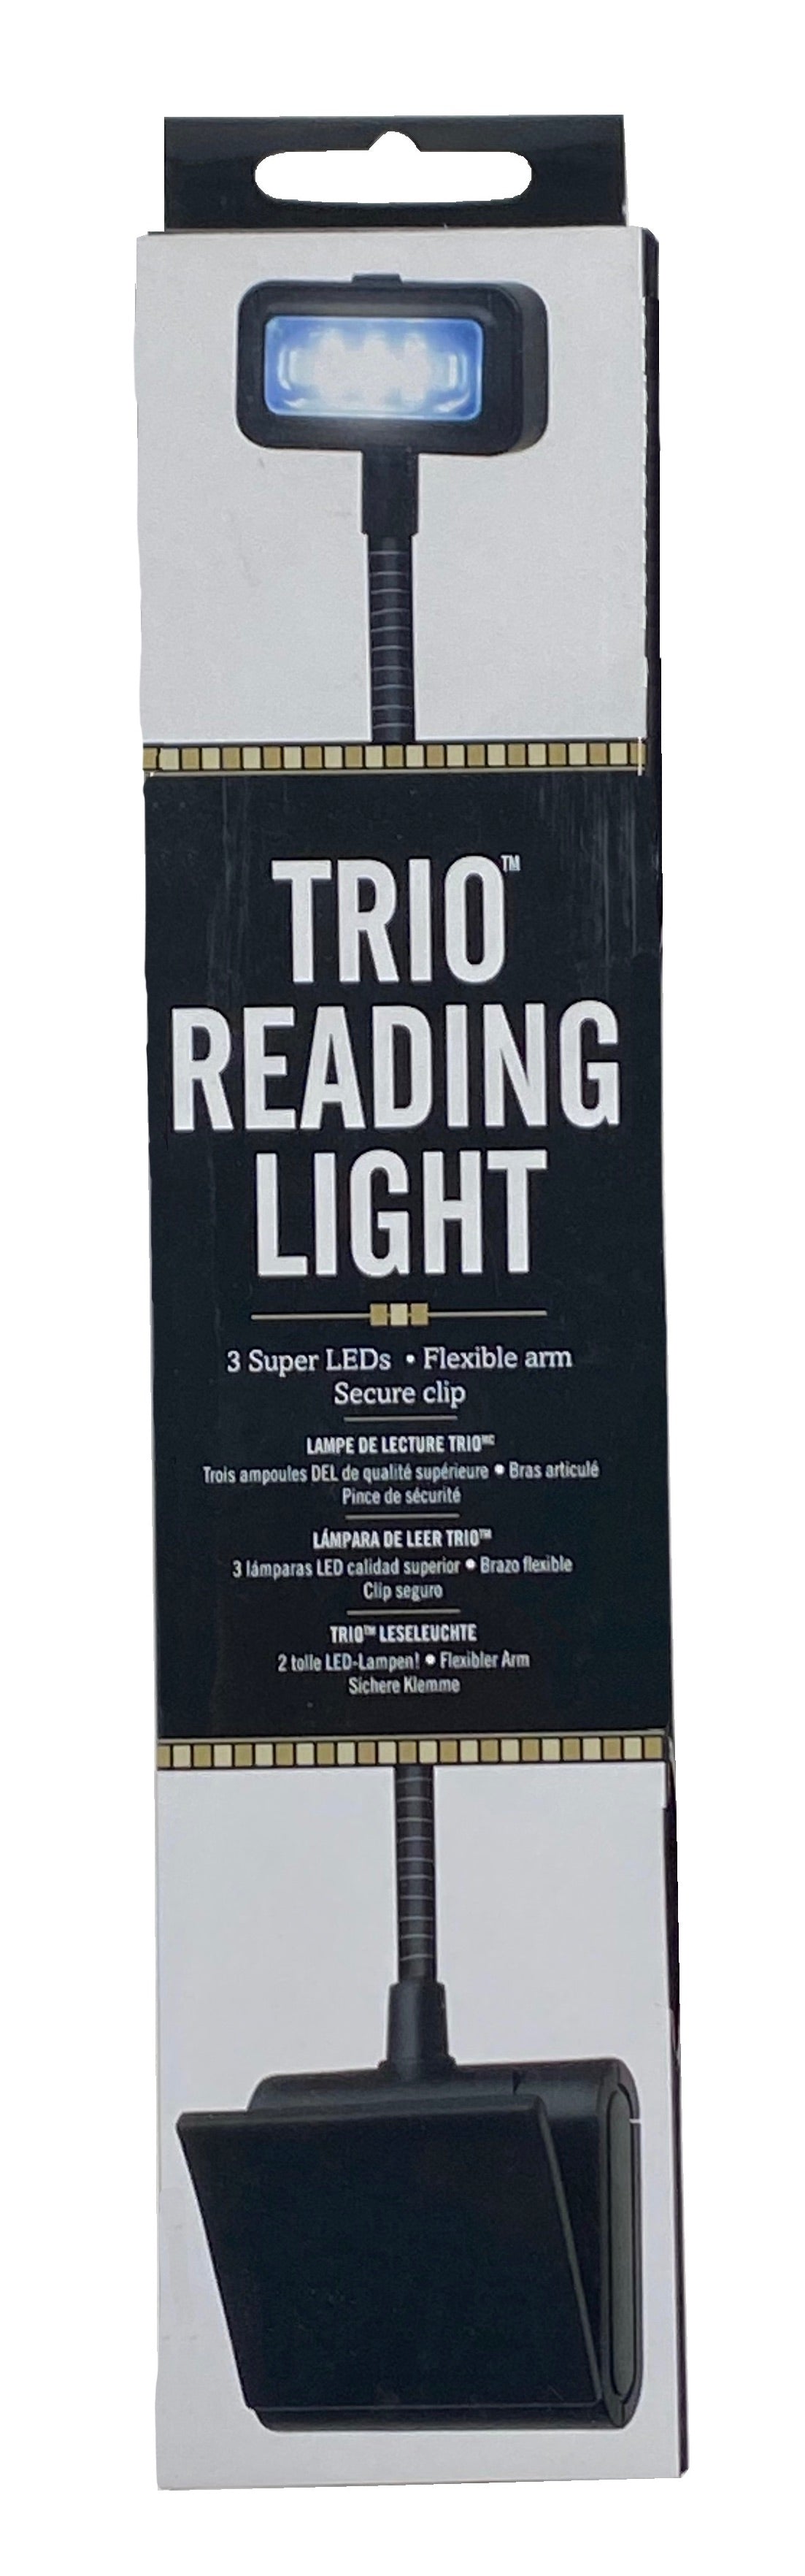 Trio 3LED Reading Light - Black    